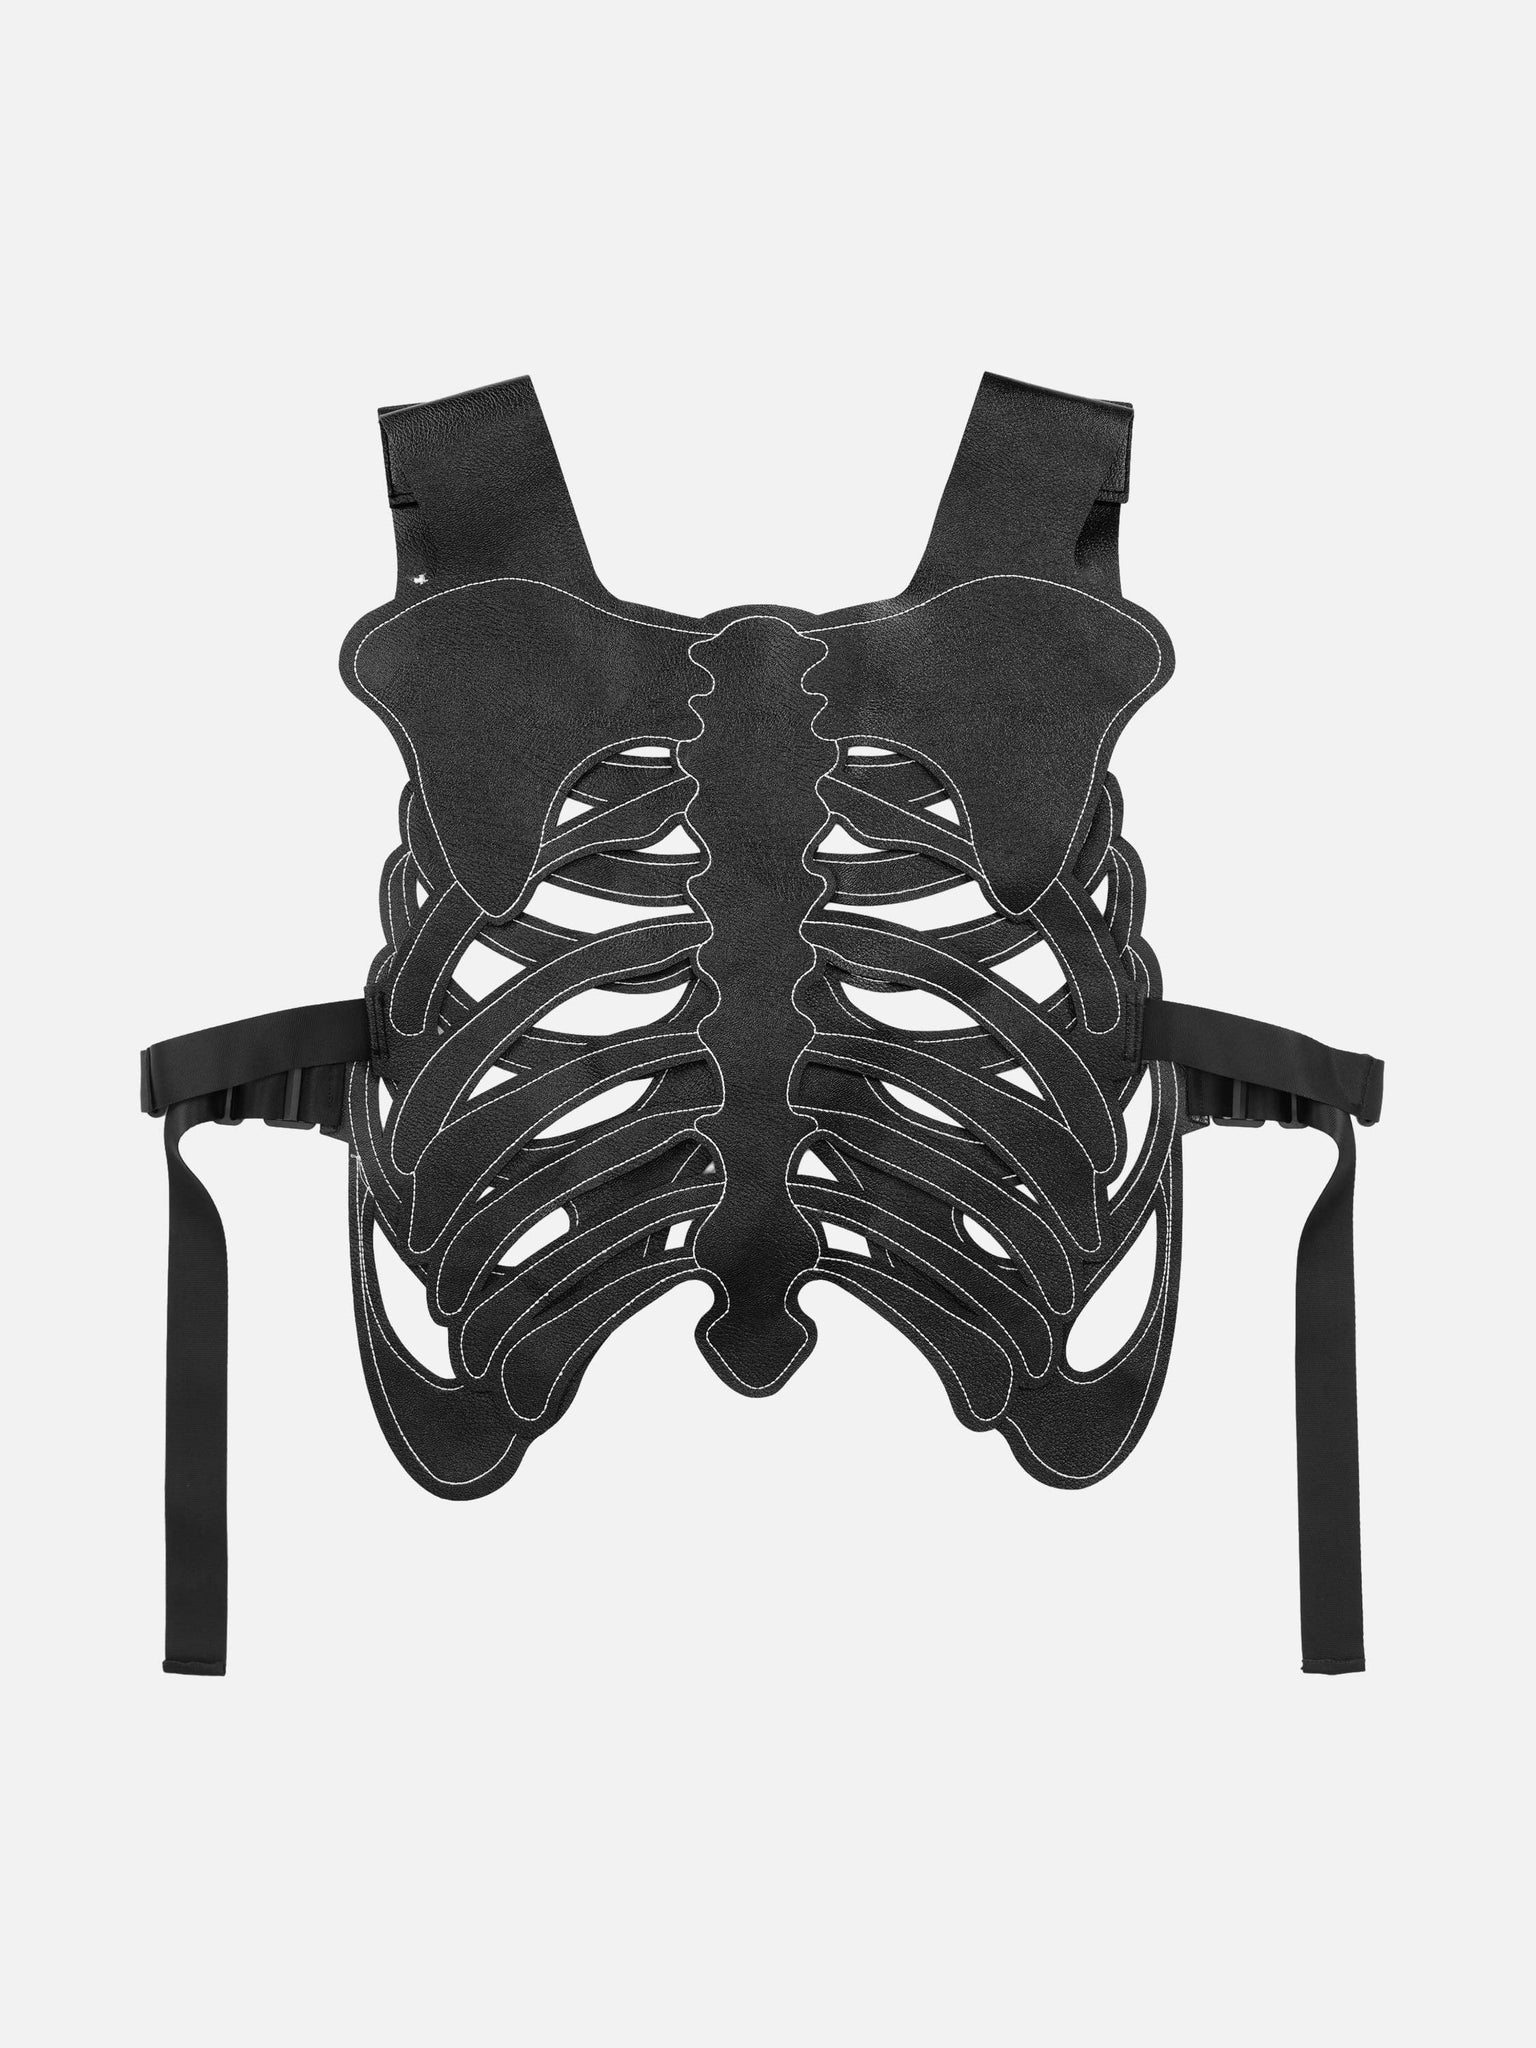 Thesupermade Creative Design Bone Skin Vest